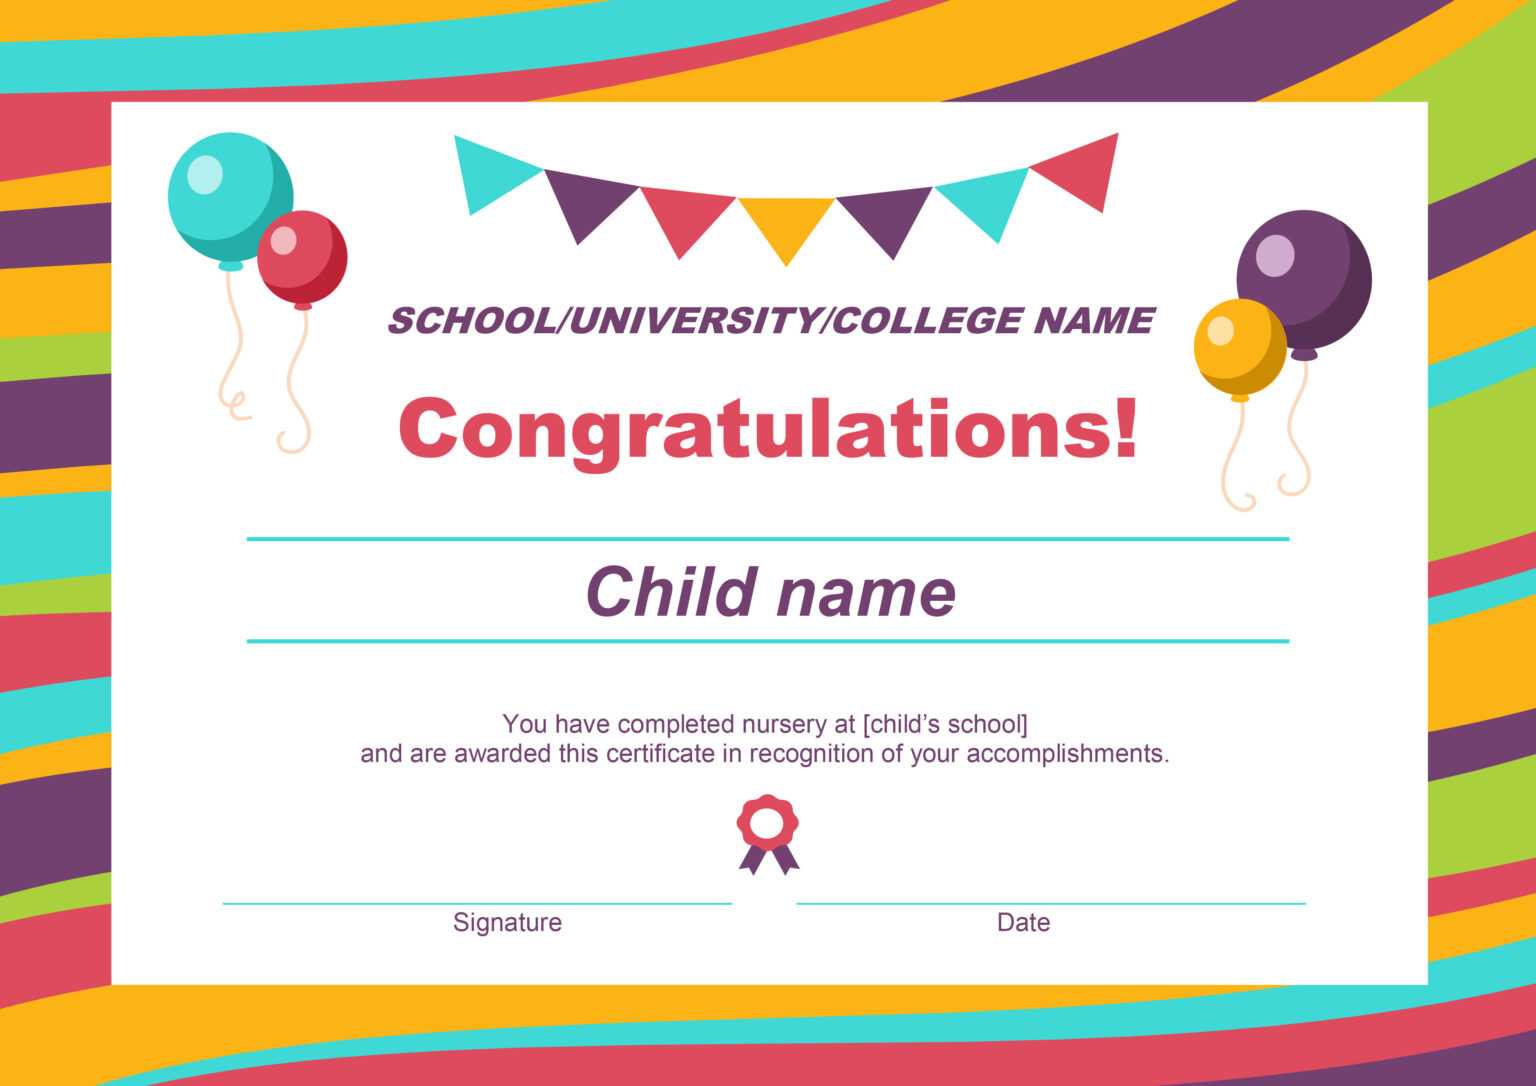 50-free-creative-blank-certificate-templates-in-psd-regarding-children